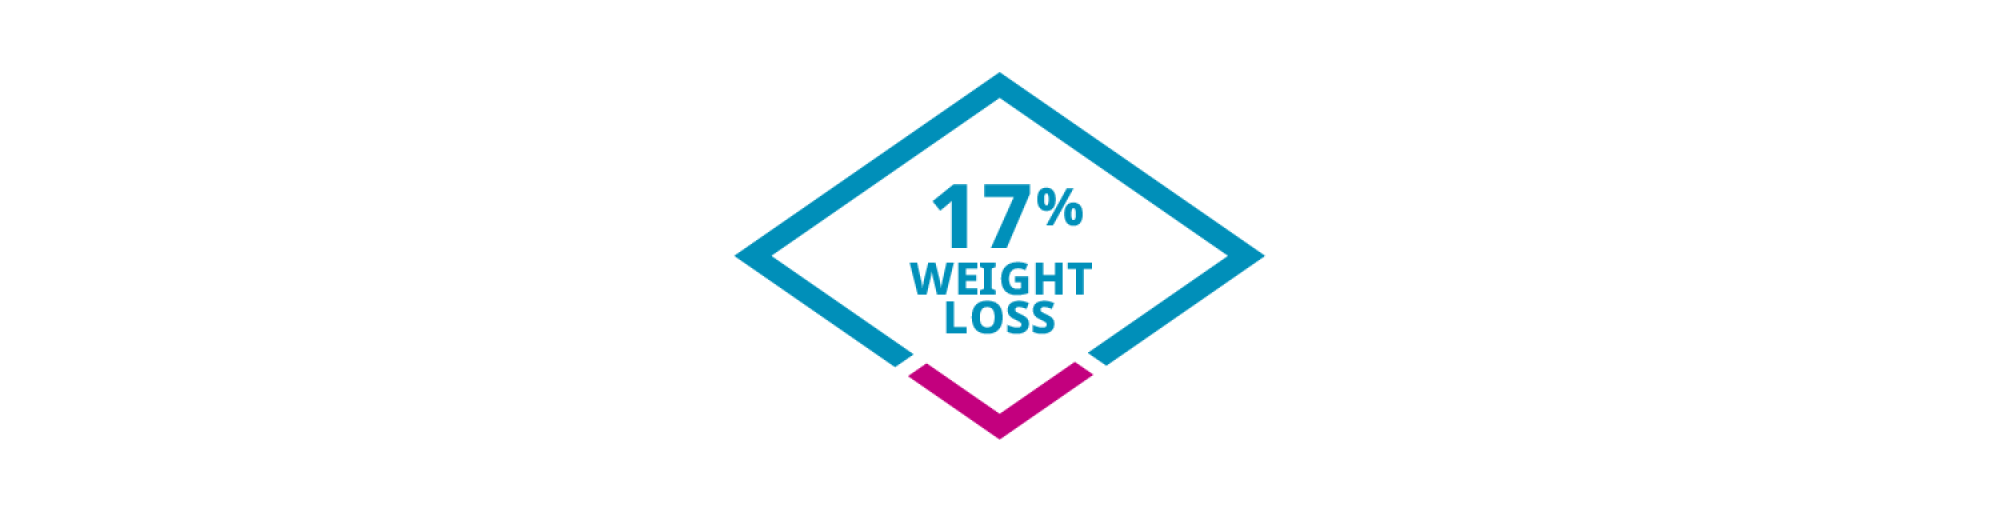 17% weight loss